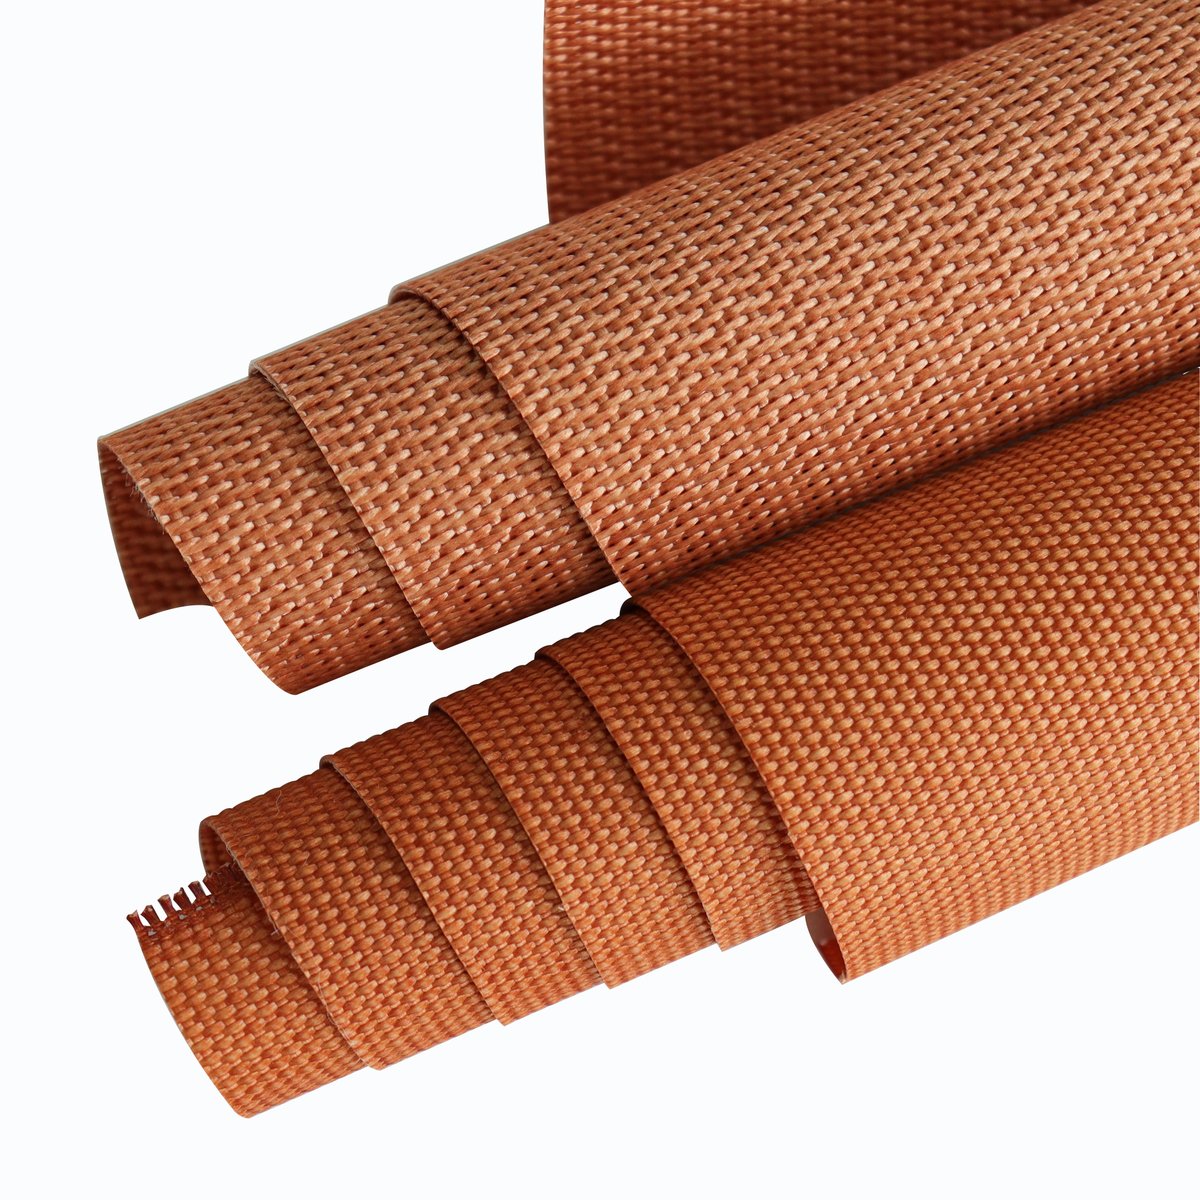 🎉Canvas fabric For Conveyor Belt
❤️Main types: EP, EE, NN (PP), SW (EPP), EM, DPP, special type main specifications: EP80-EP800, NN80-NN800, SW300-SW1200
✅Whatsapp：+8619819100608
💌：sales3@kangruigroup.com
#canvasfabric #conveyorbelt
#ep200 #ee200 #fabric